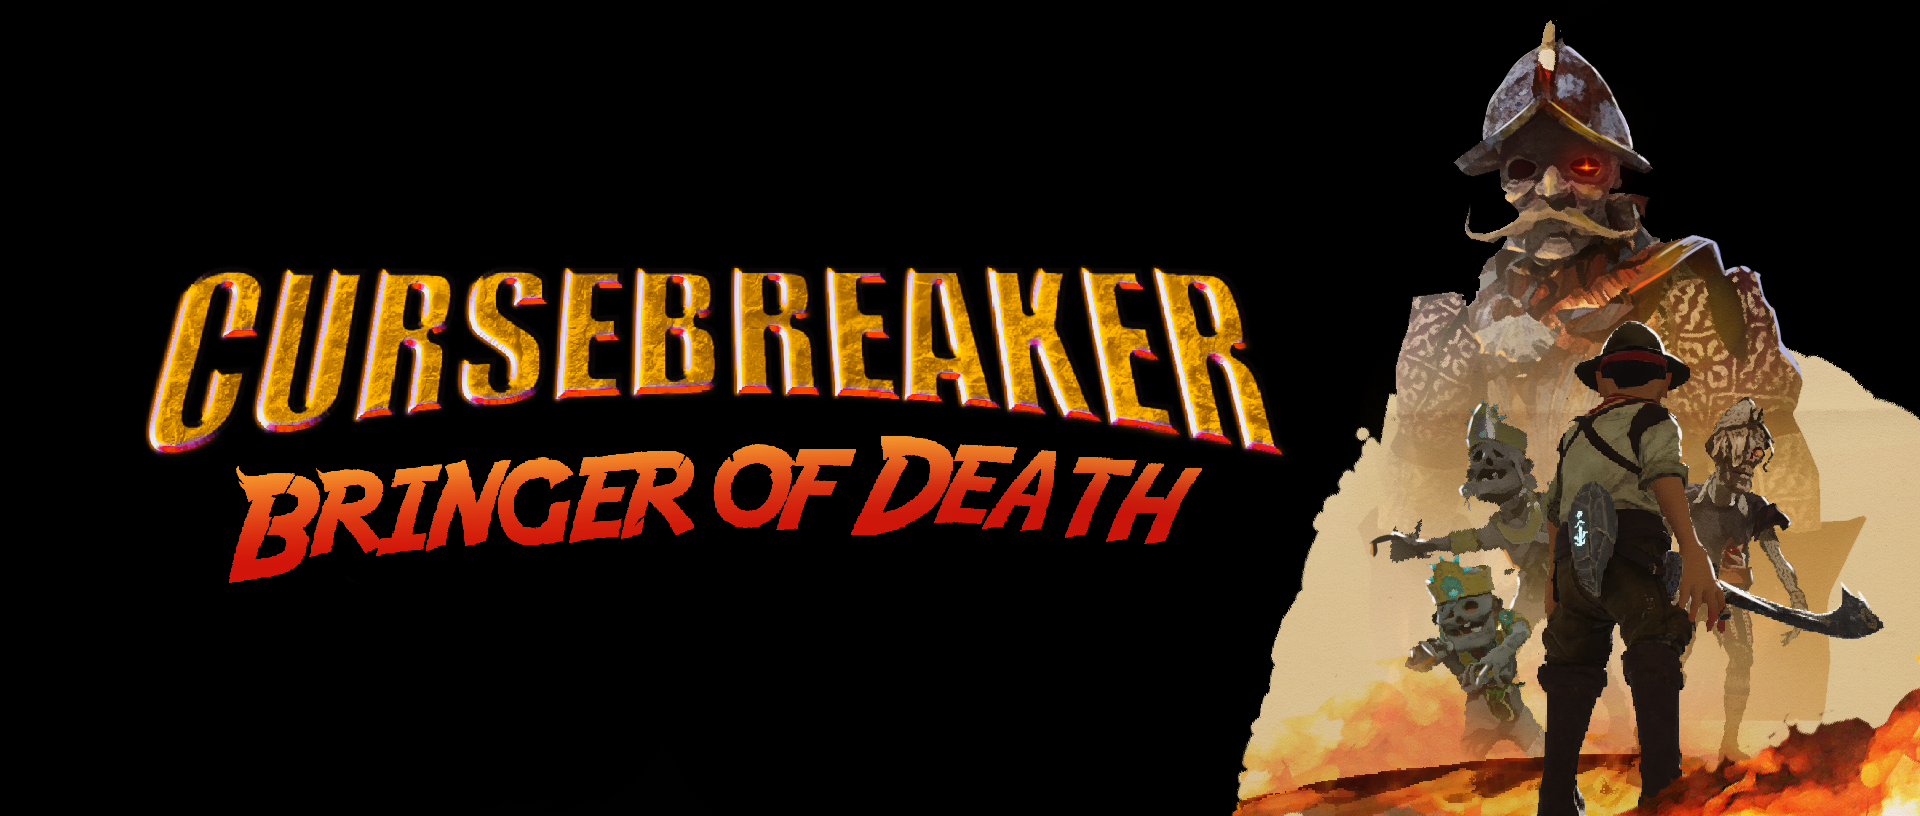 CurseBreaker: Bringer of Death